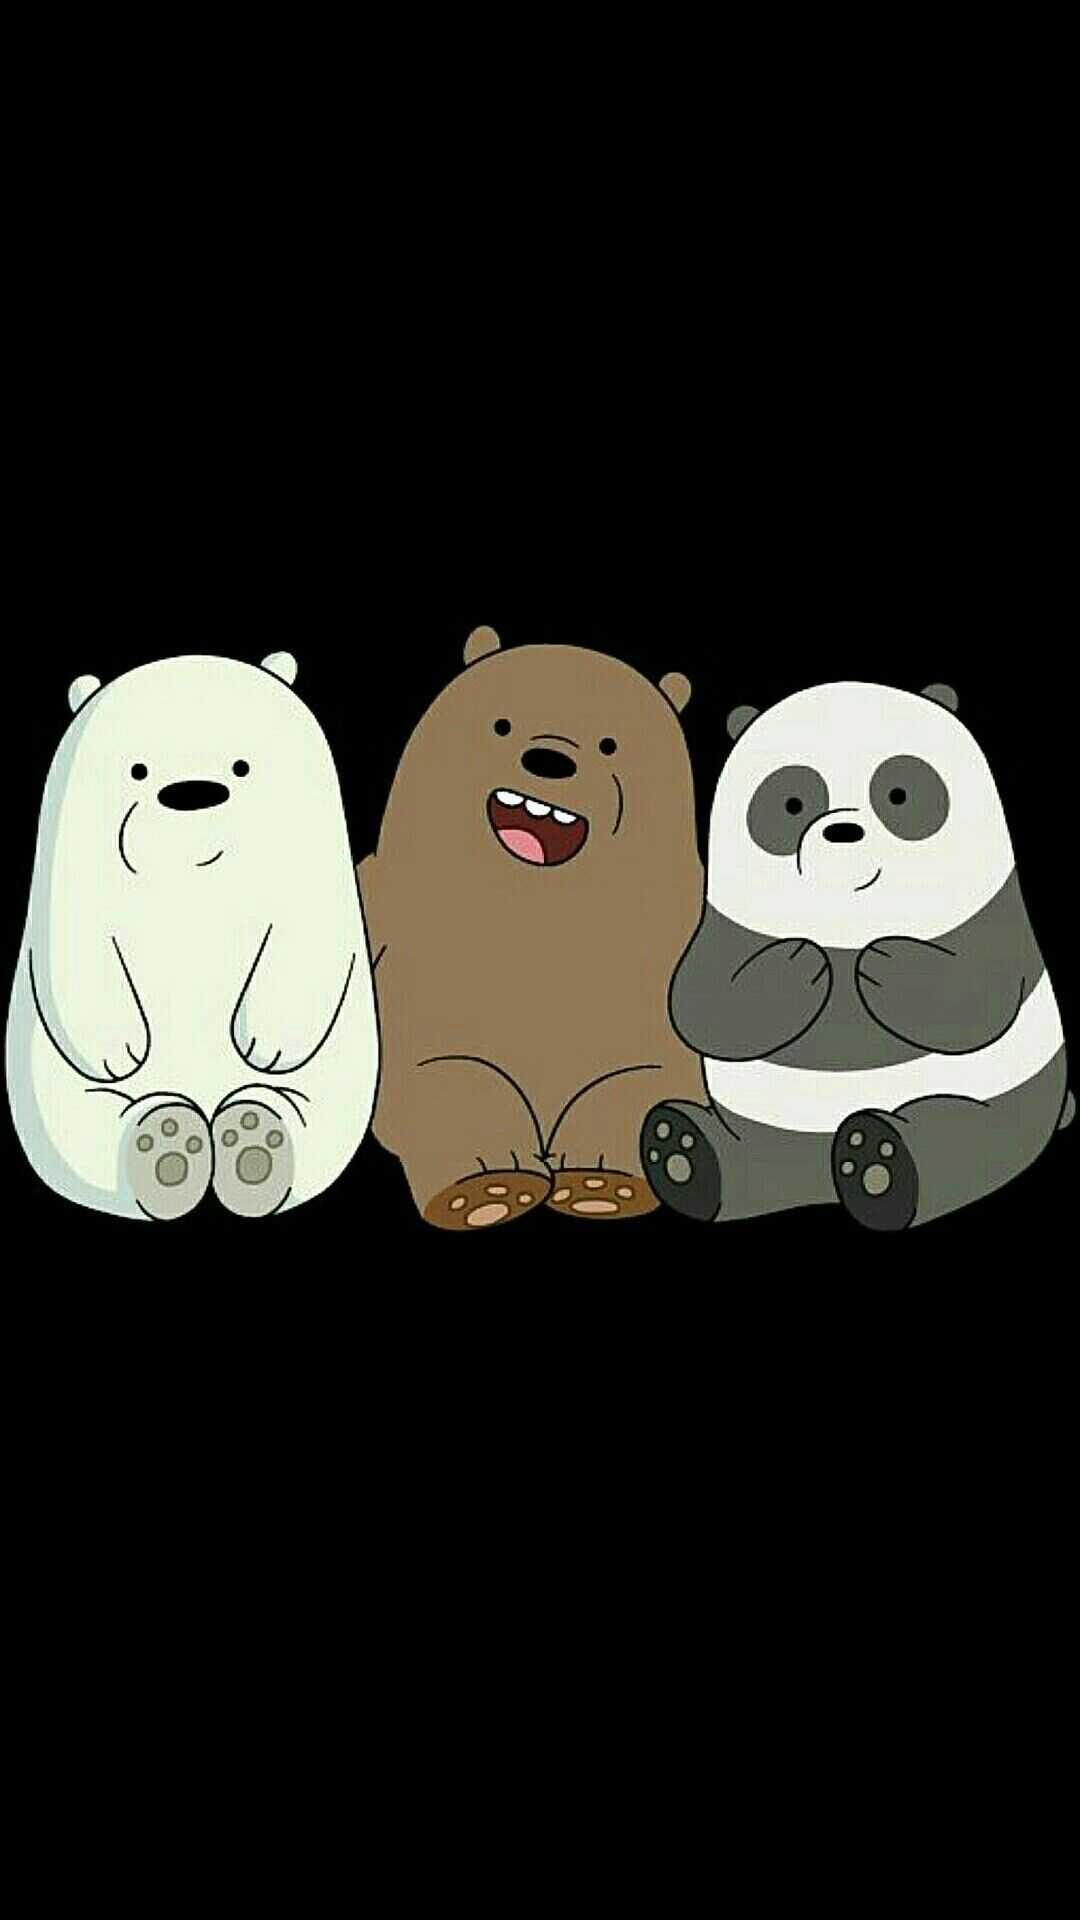 Three cute bears and a panda sitting together - We Bare Bears